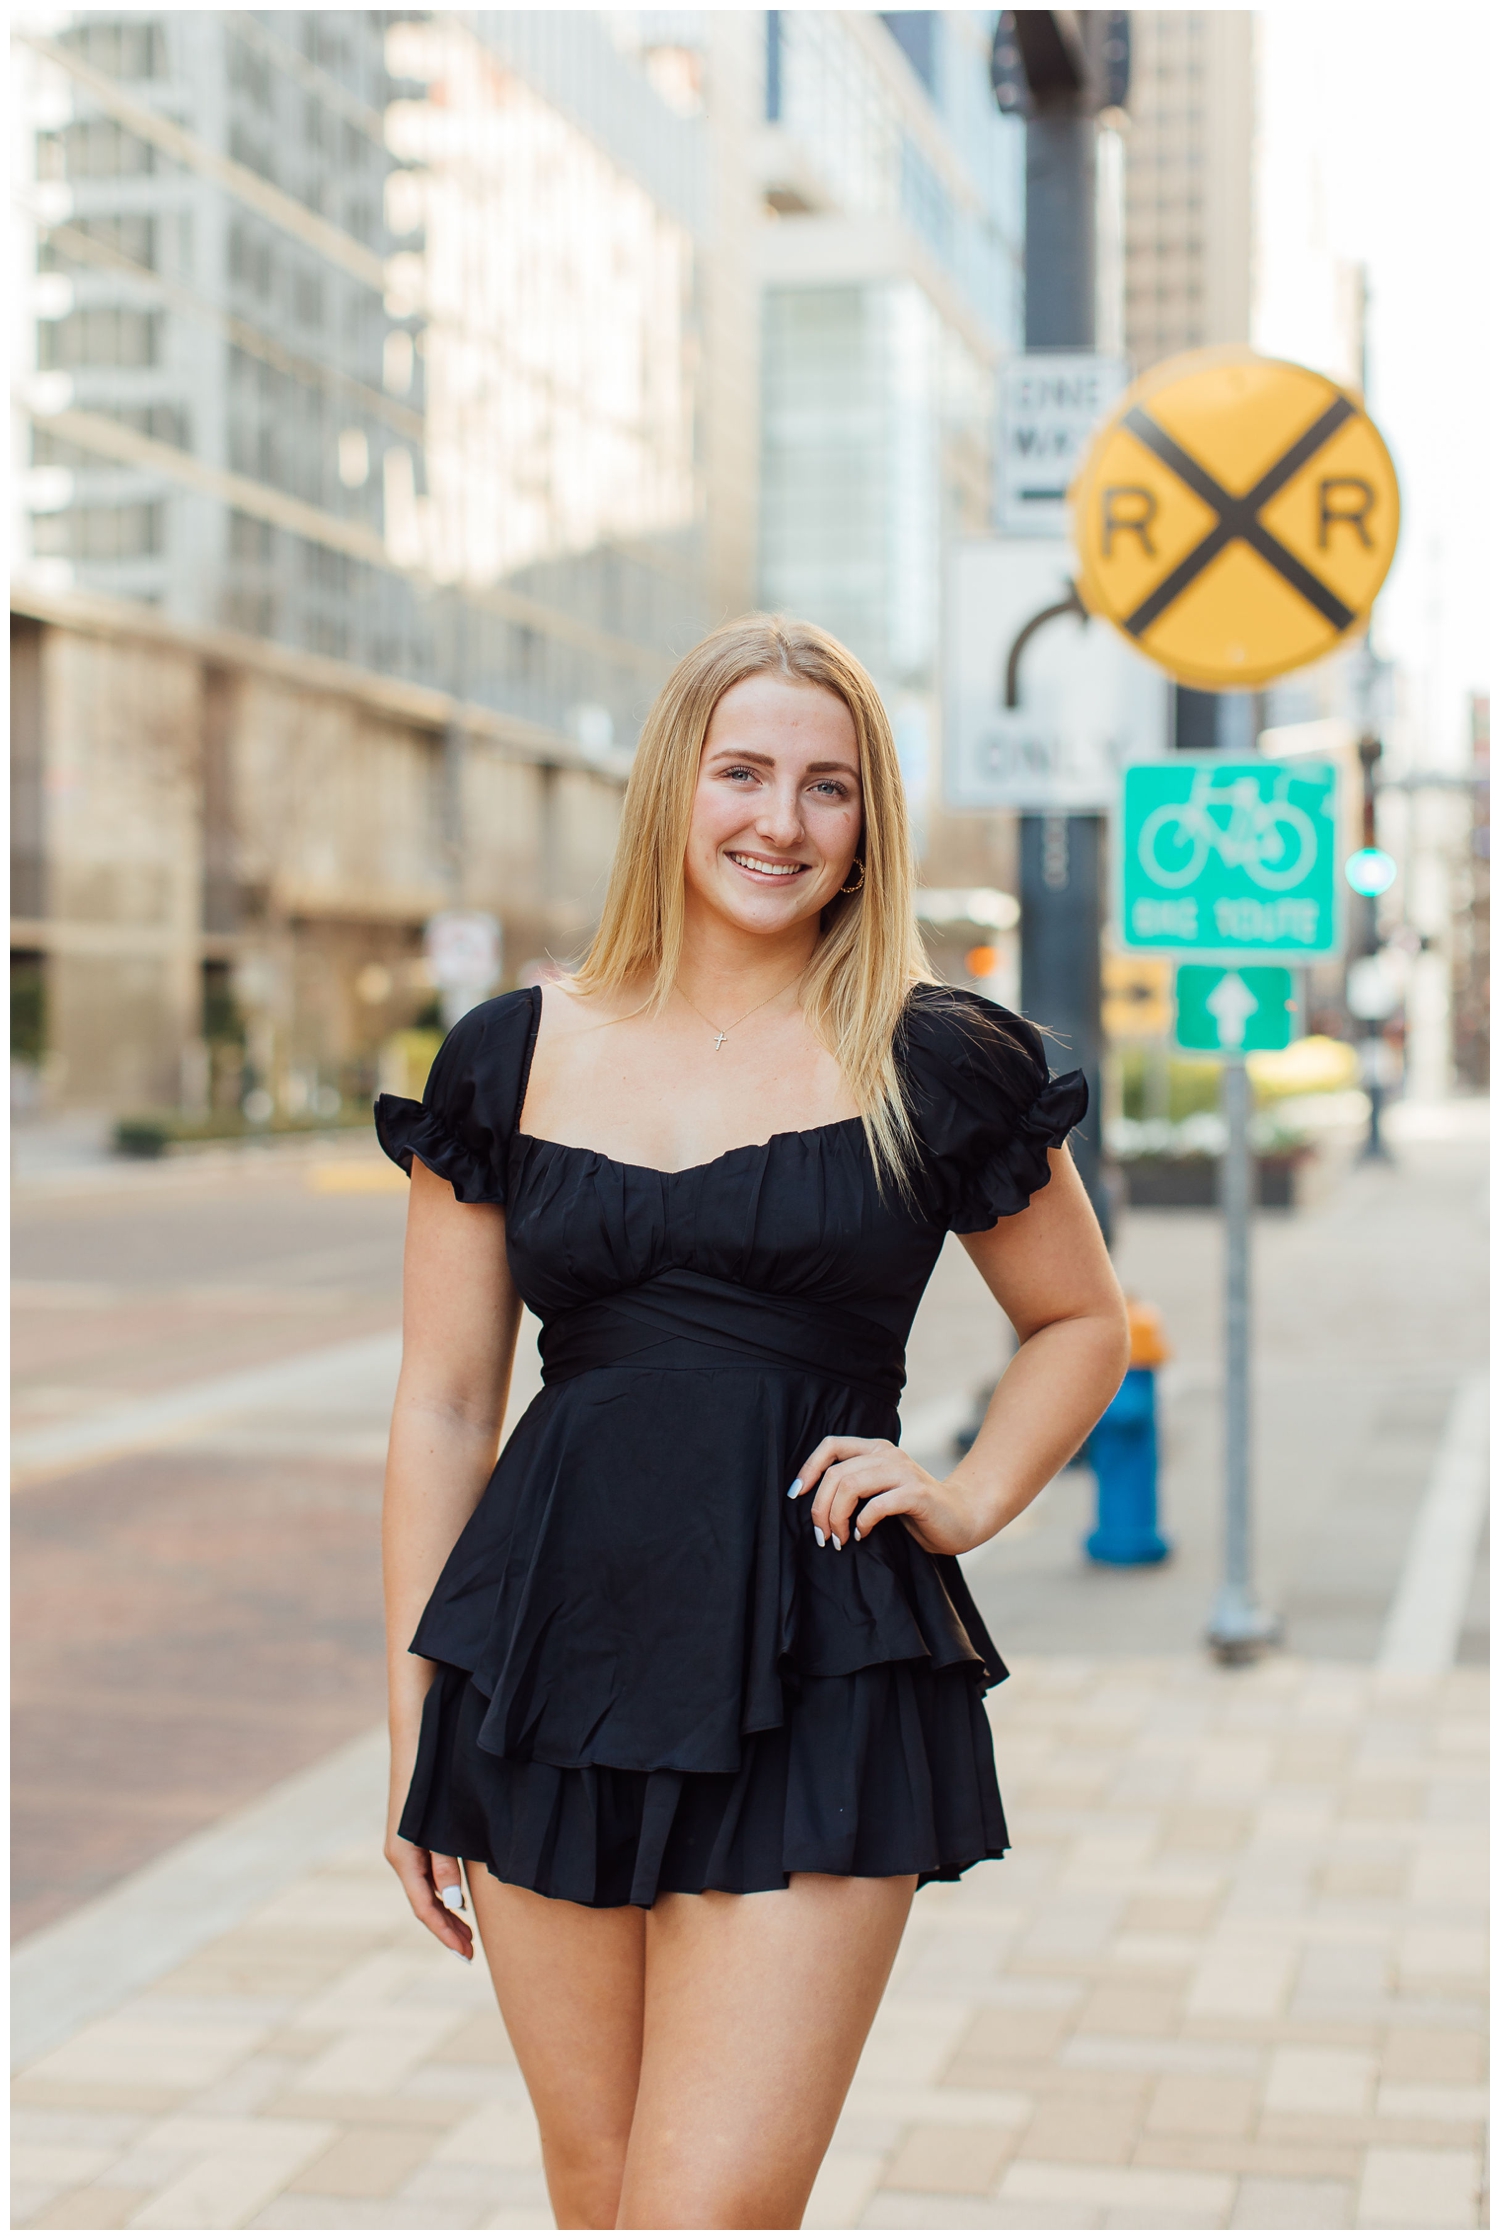 Urban senior photos Houston Main Street with girl in black dress hands on hips